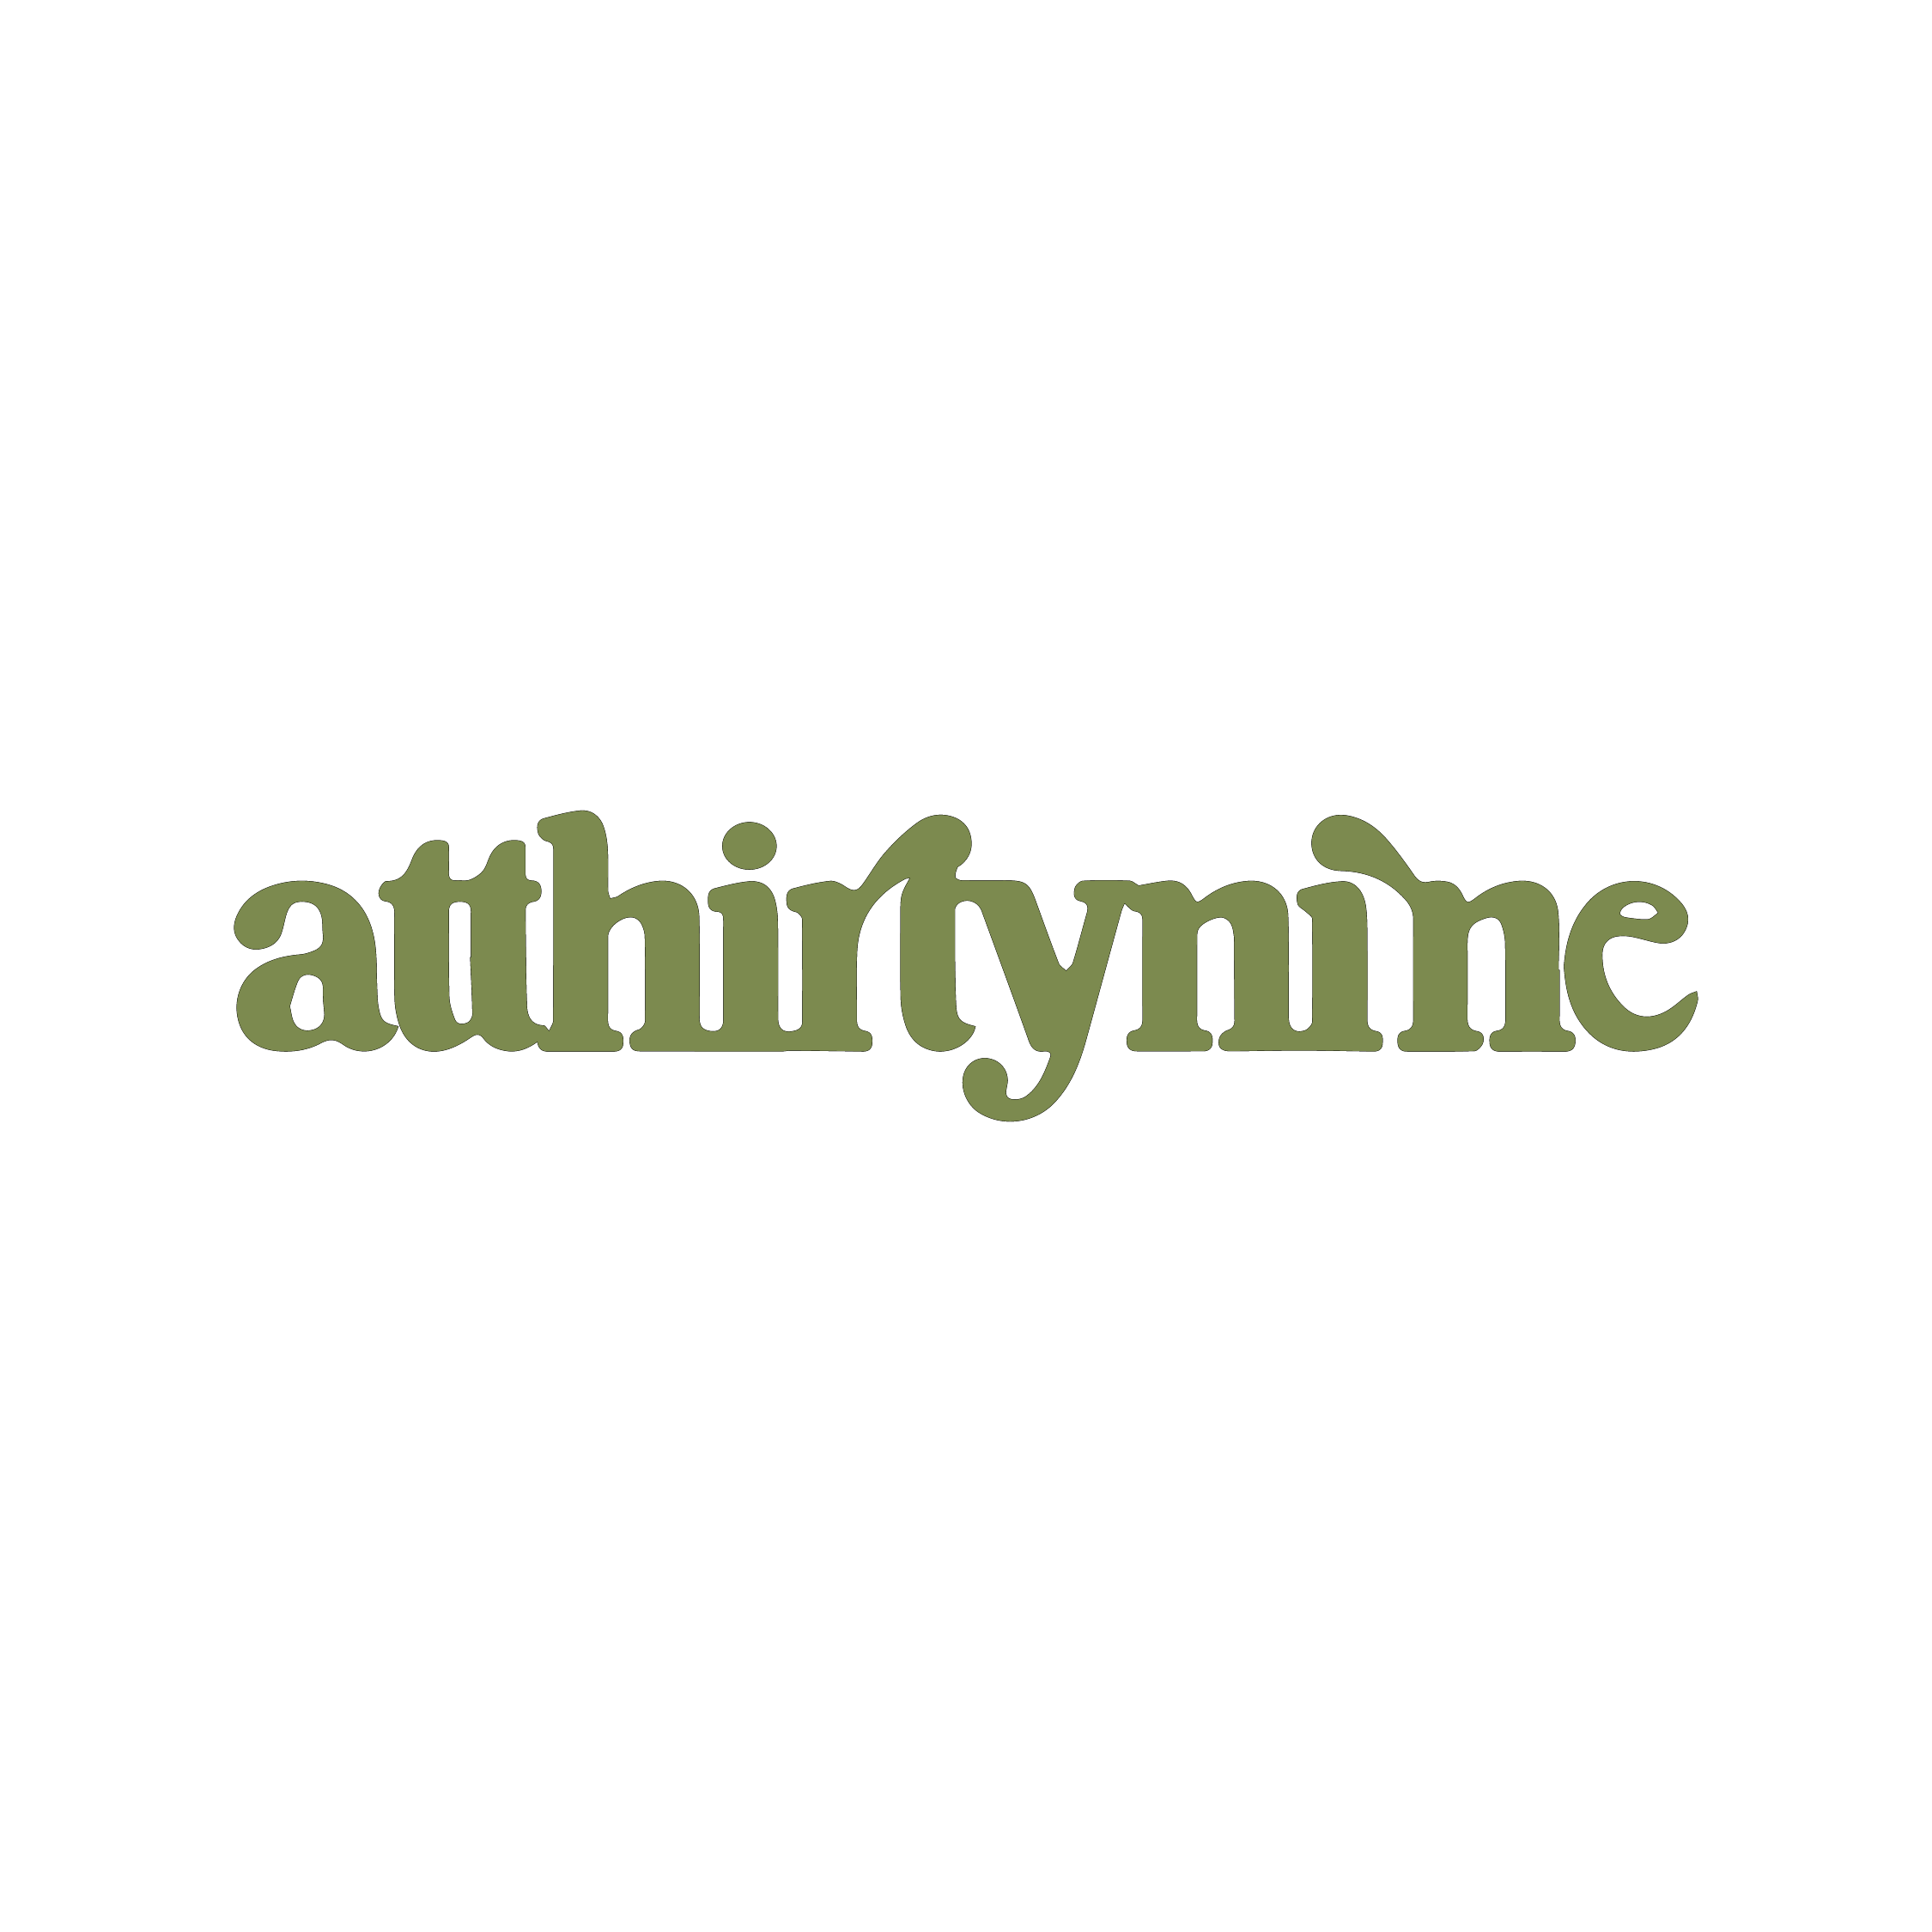 atthirtynine